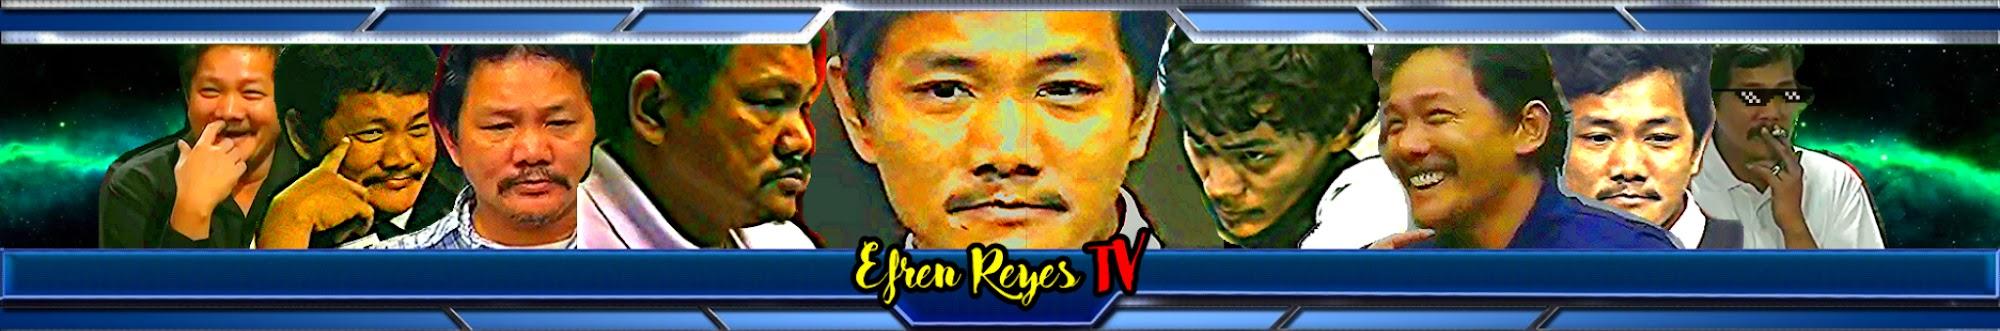 Efren Reyes TV